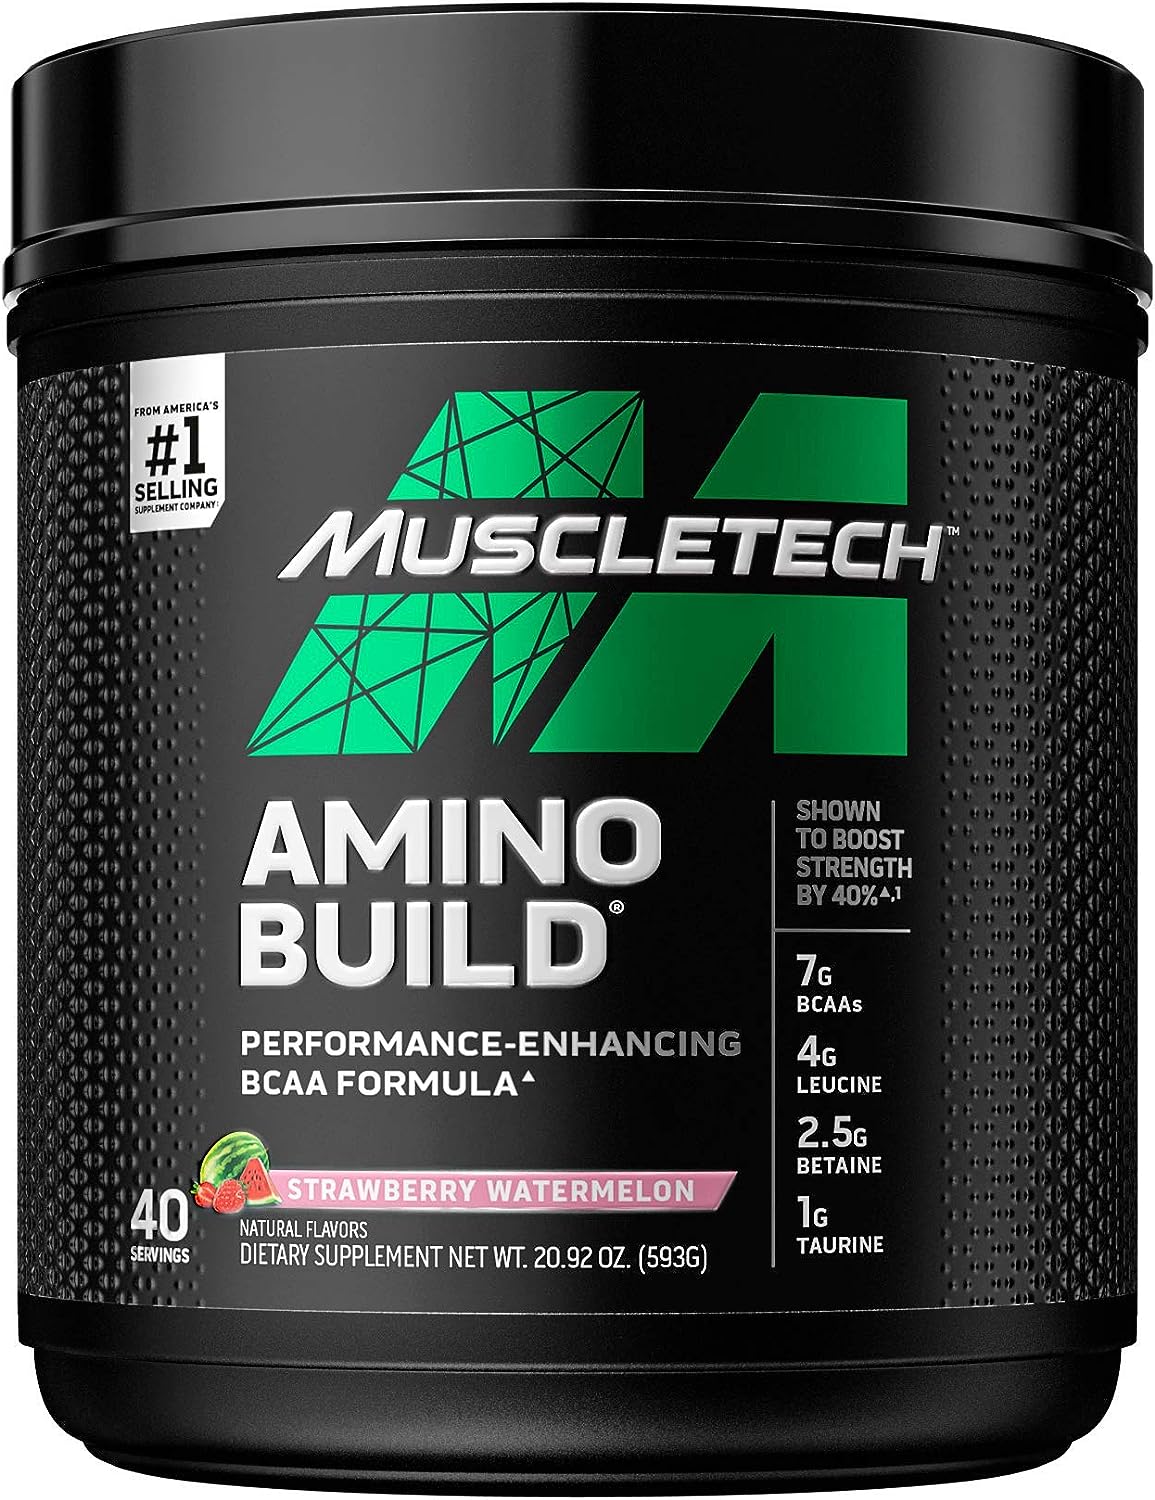 آمینو بیلد ماسل تک اورجینال مدل MuscleTech Amino Build 40 servings - ارسال 10 الی 15 روز کاری